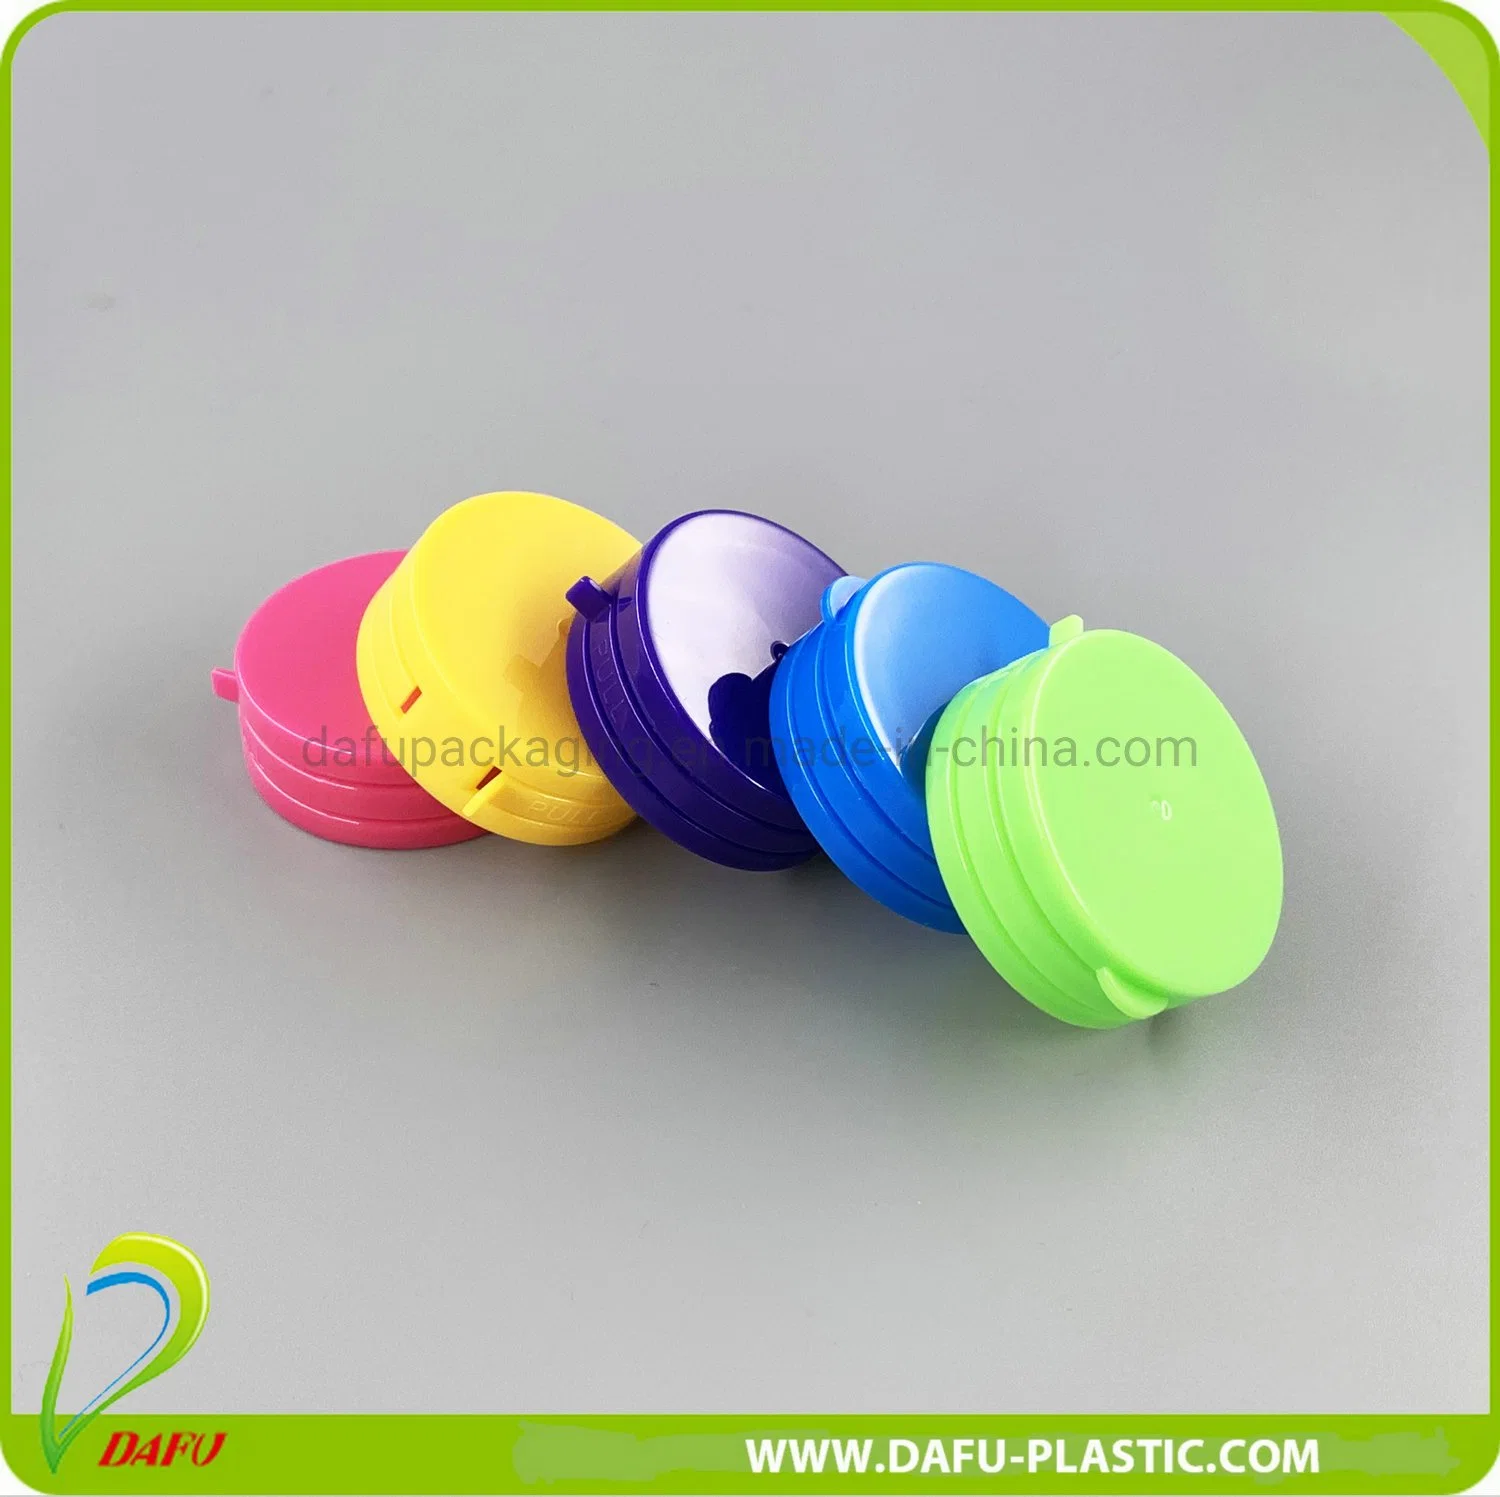 33/38/45 PP HDPE Plastic Cap Plastic Lid for Bottle Packaging